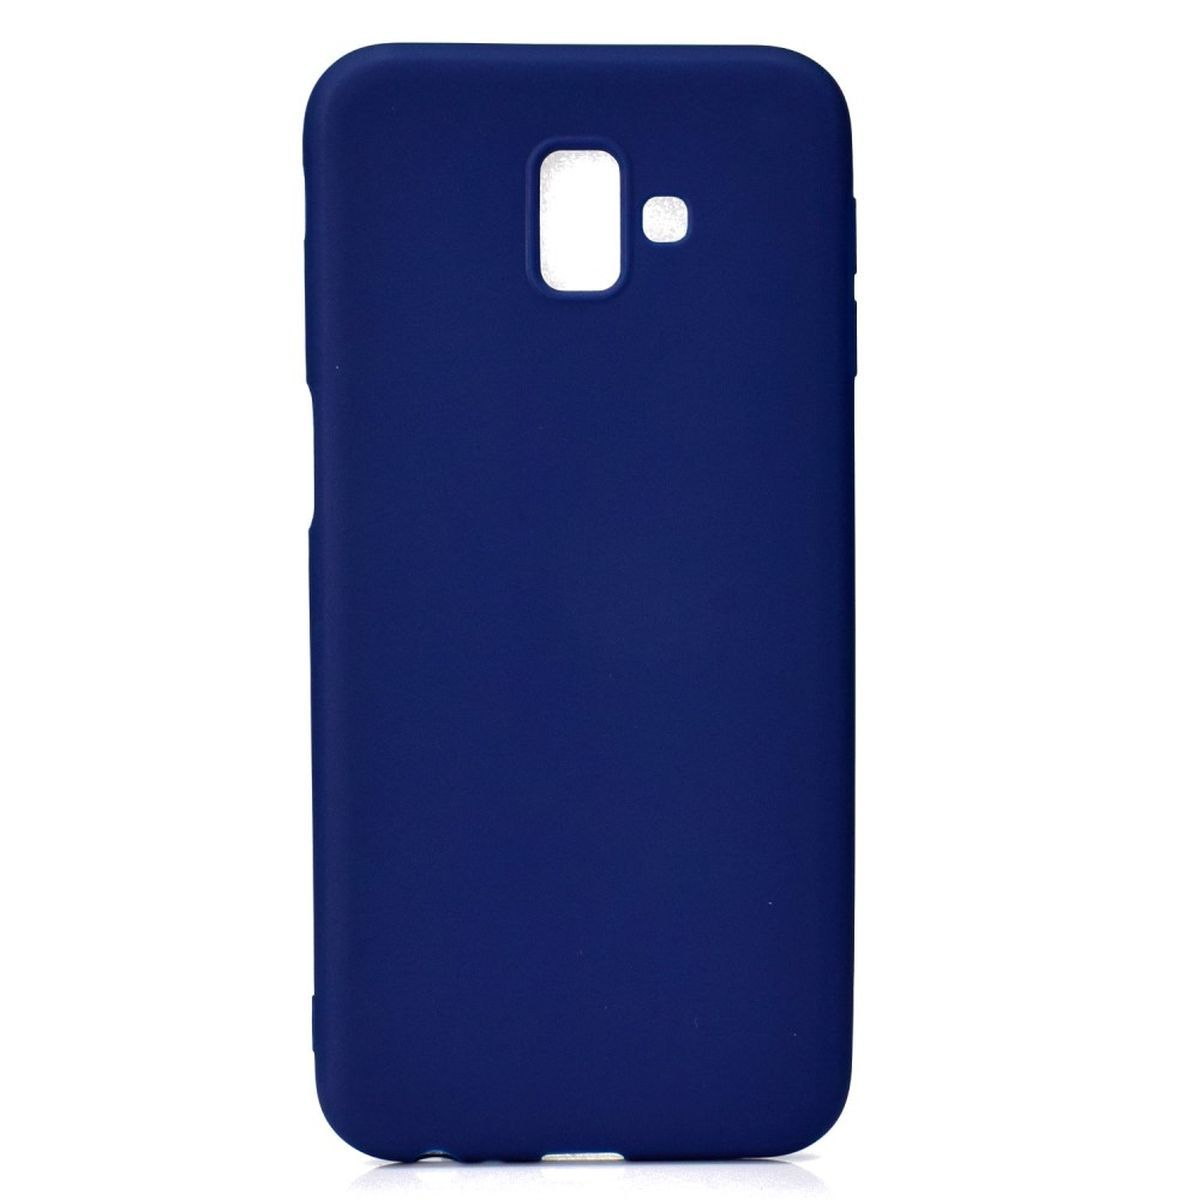 COVERKINGZ Handycase aus Plus, Backcover, Blau Silikon, J6 Galaxy Samsung